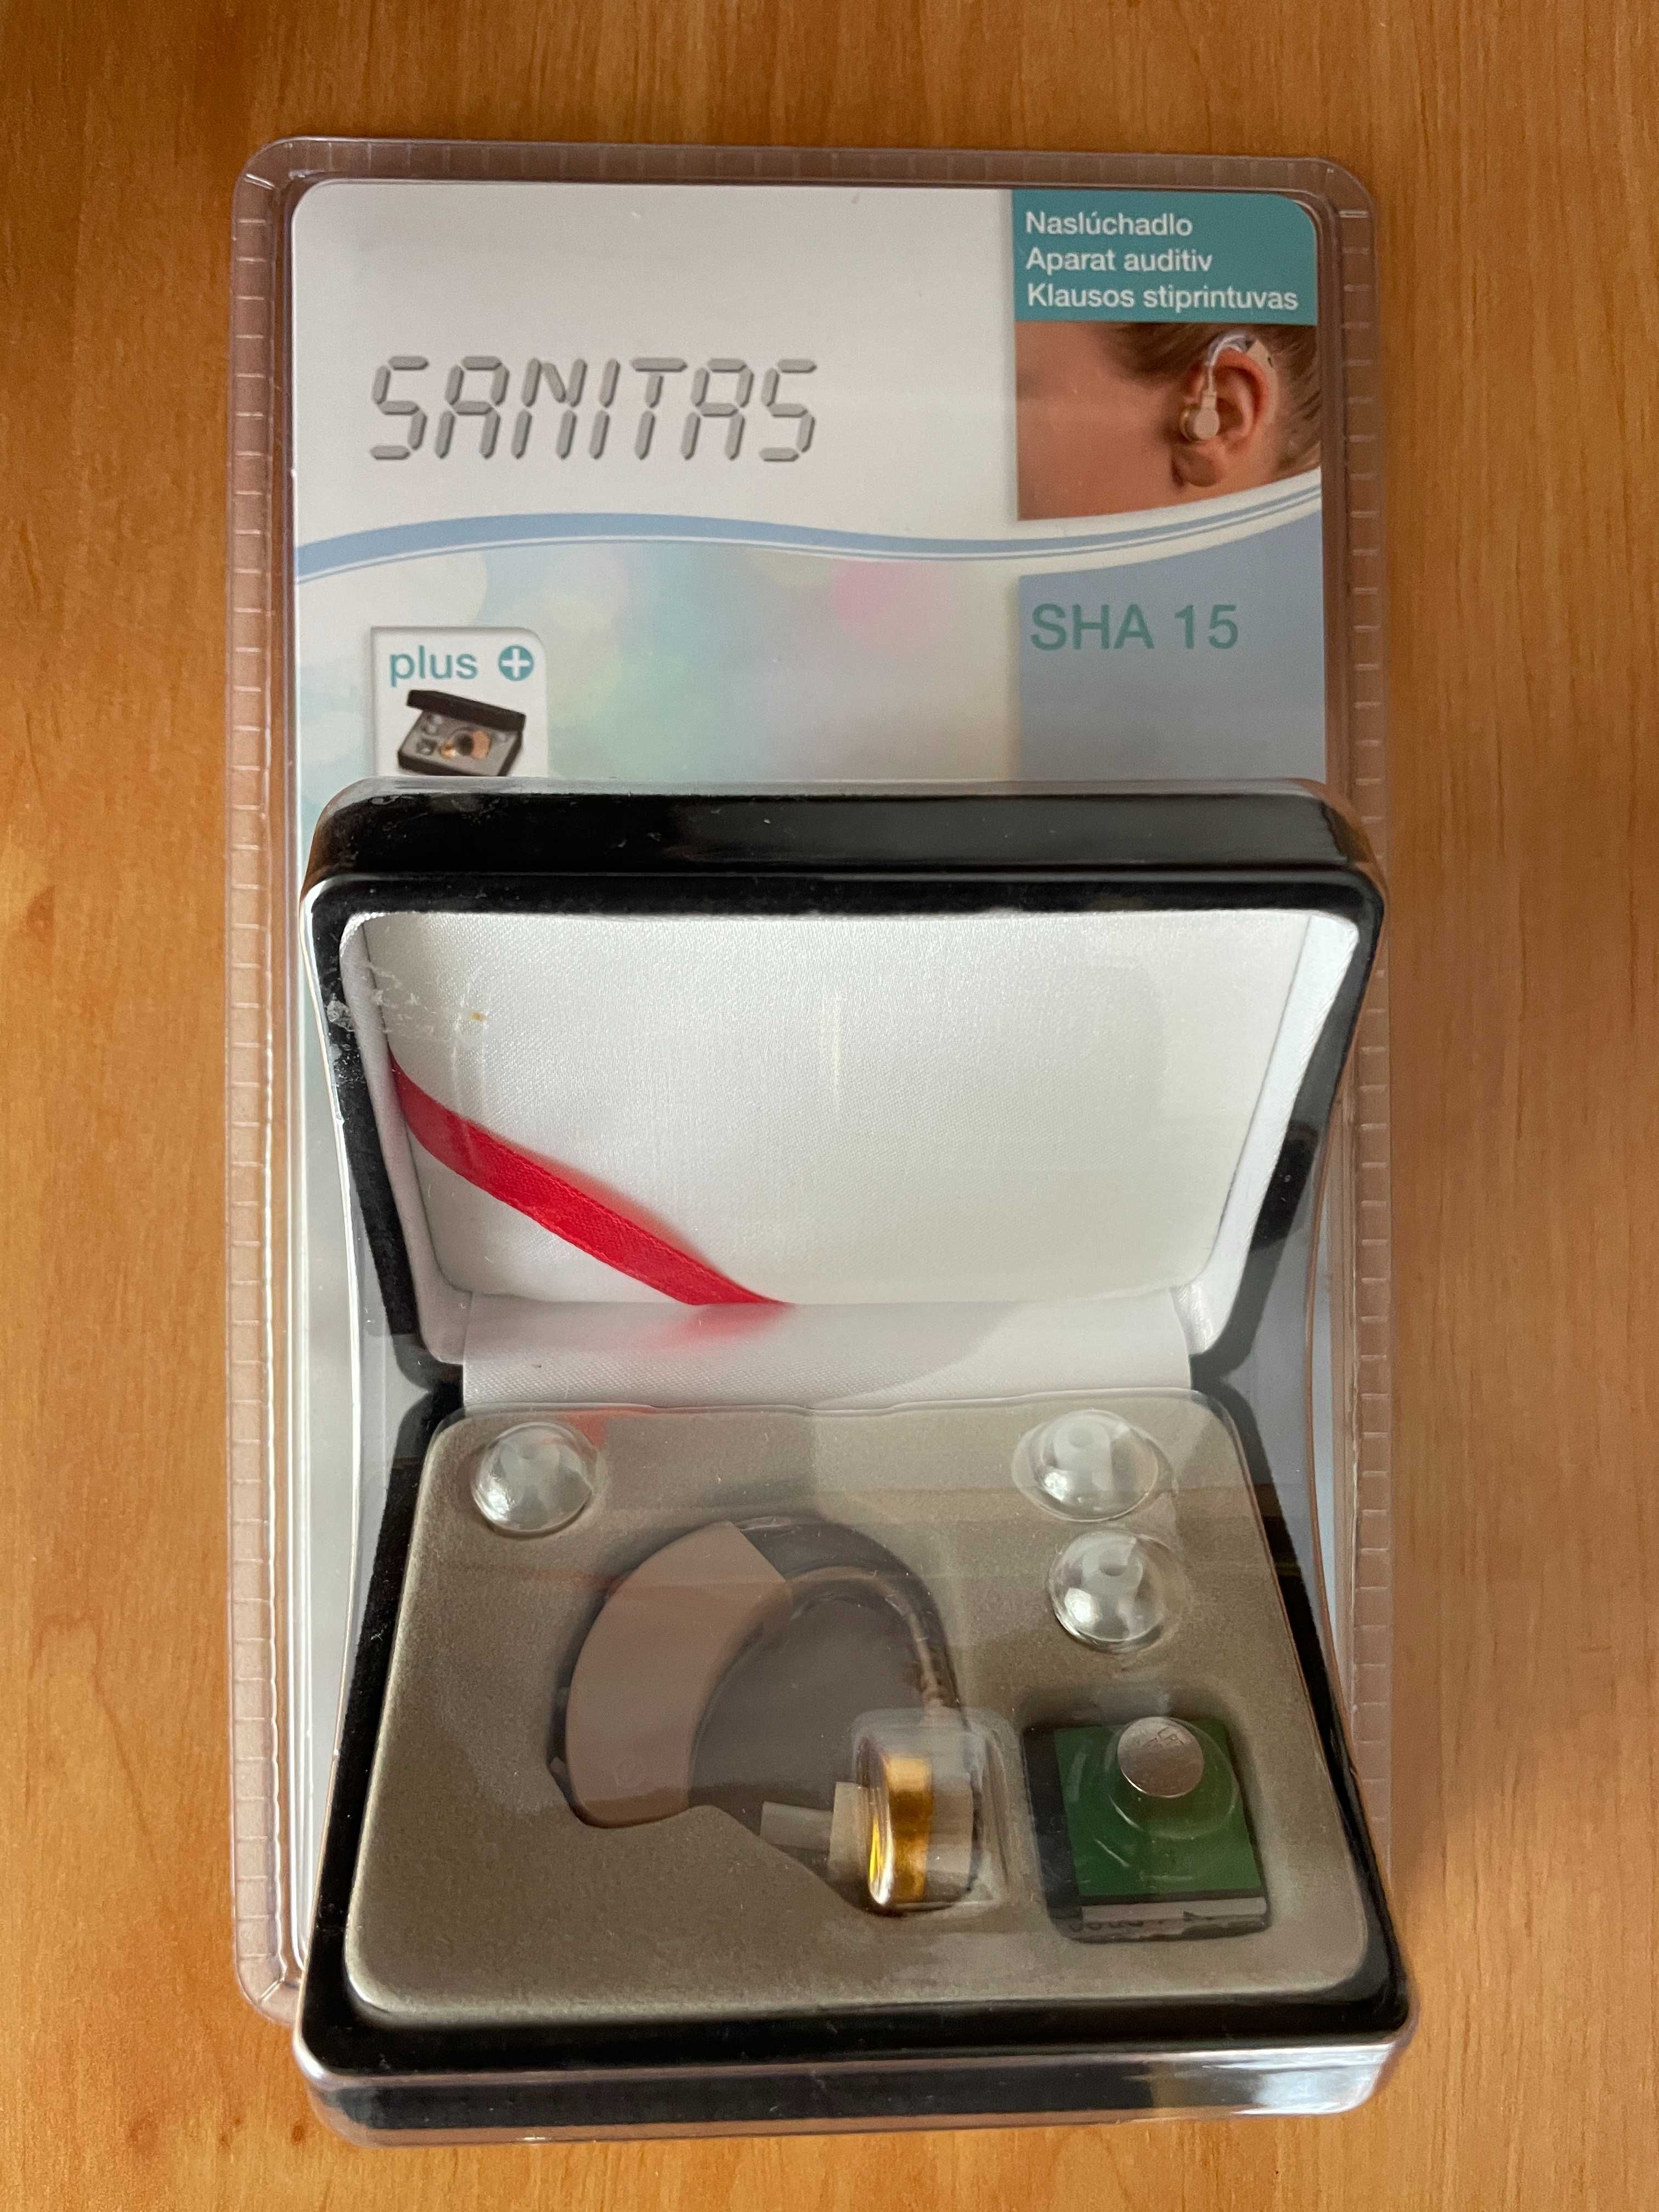 Aparat medical auditiv SANITAS nou sigilat baterii incluse